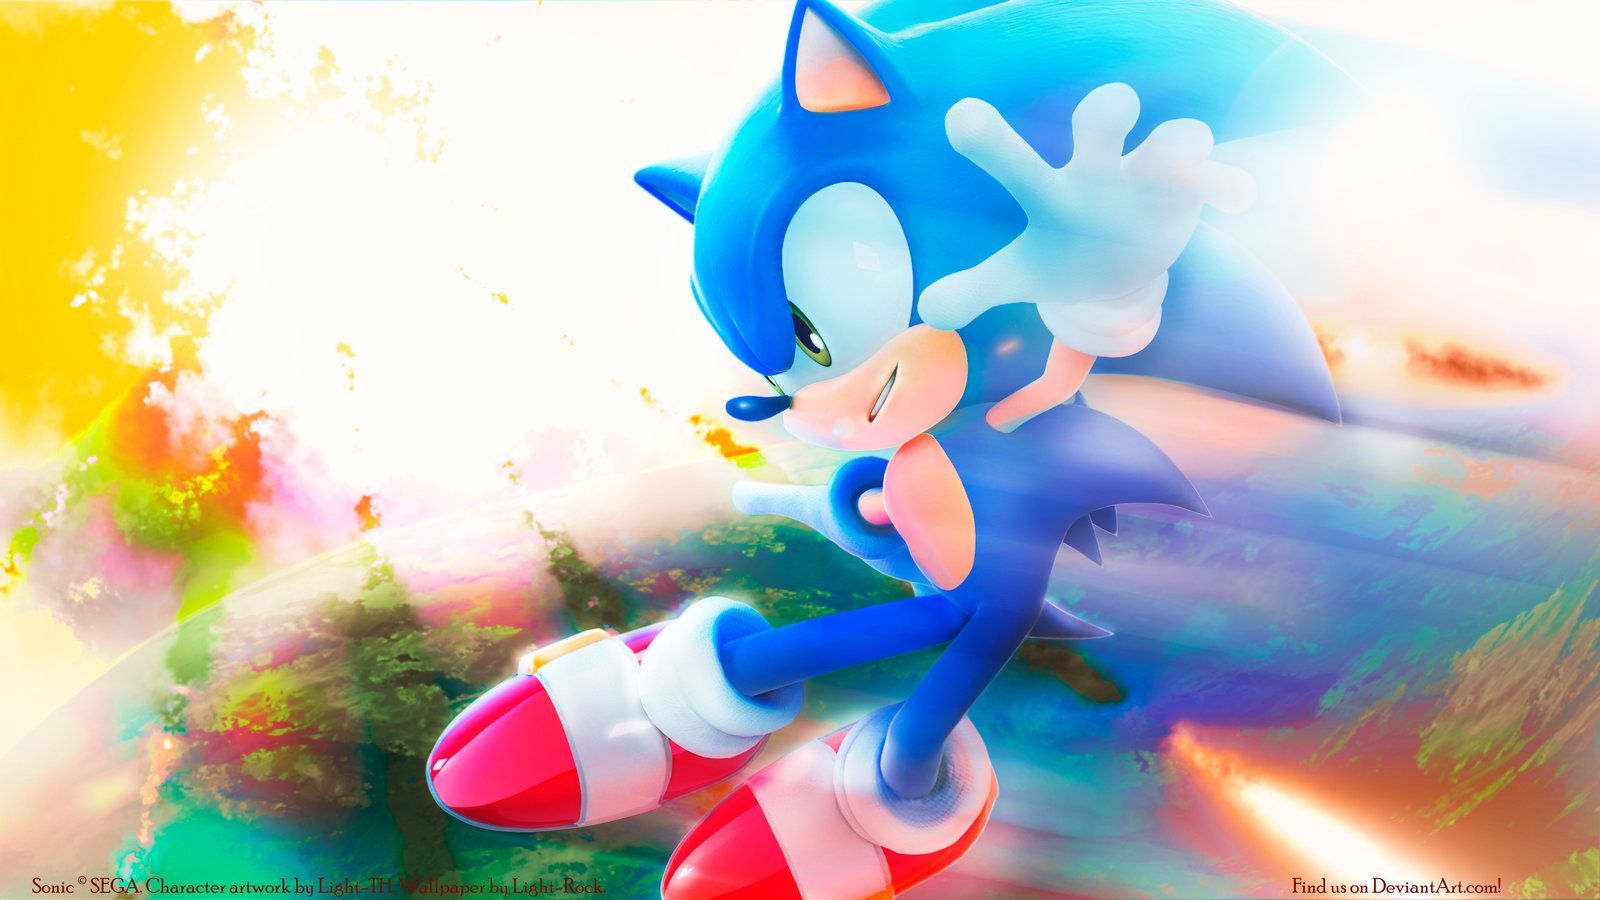 Sonic The Hedgehog Wallpaper By Light Rock. Sonic